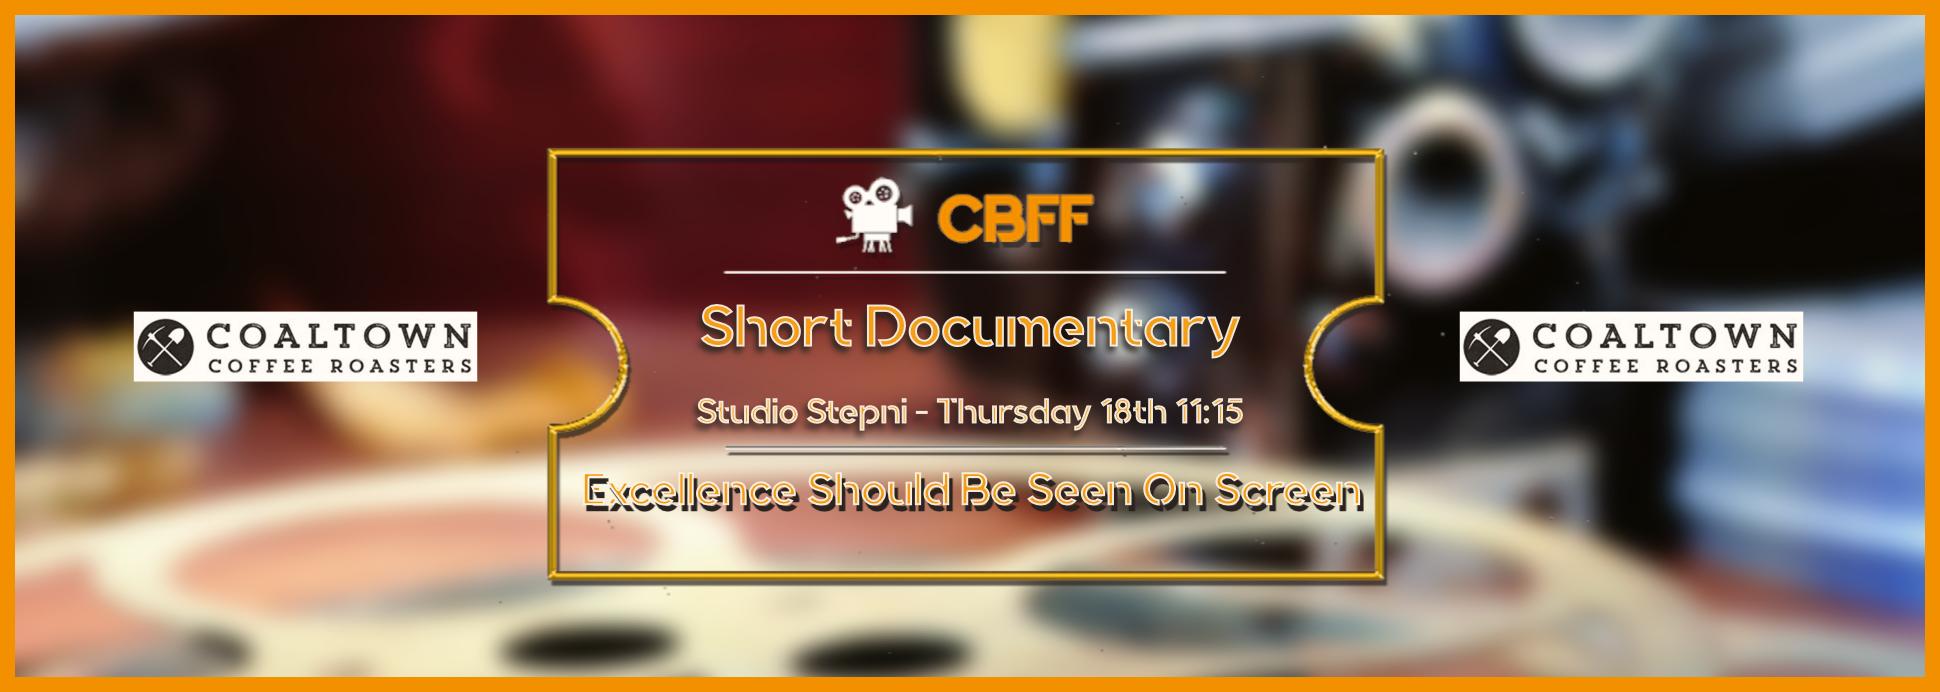 Studio Stepni - Short Documentary 18th 11:15